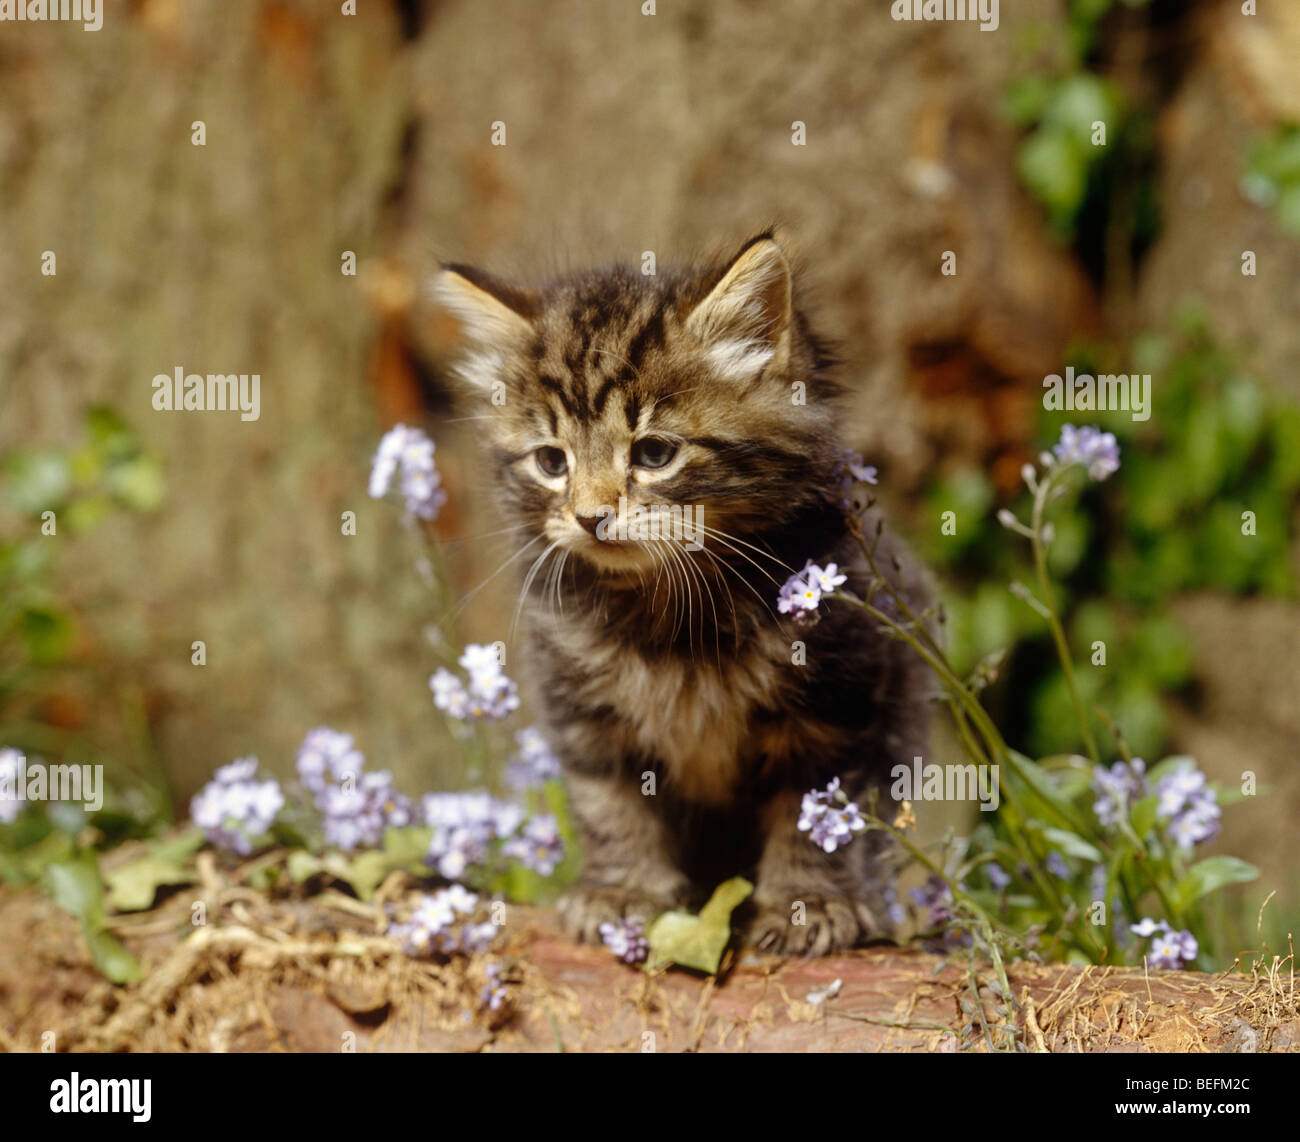 Kitten with flowers Stock Photo